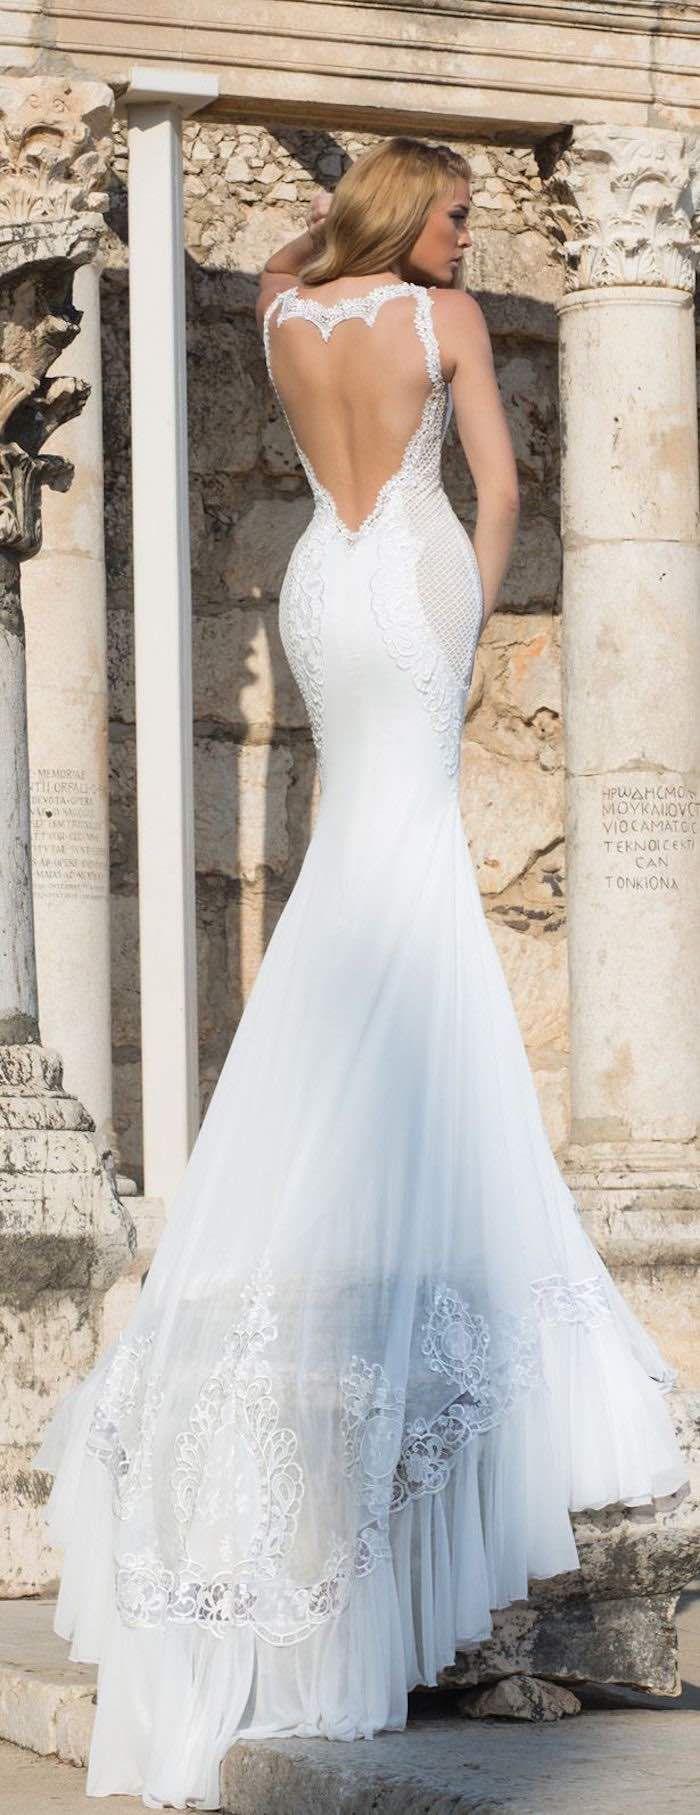 زفاف - Sexy Wedding Dresses With Hottest Details